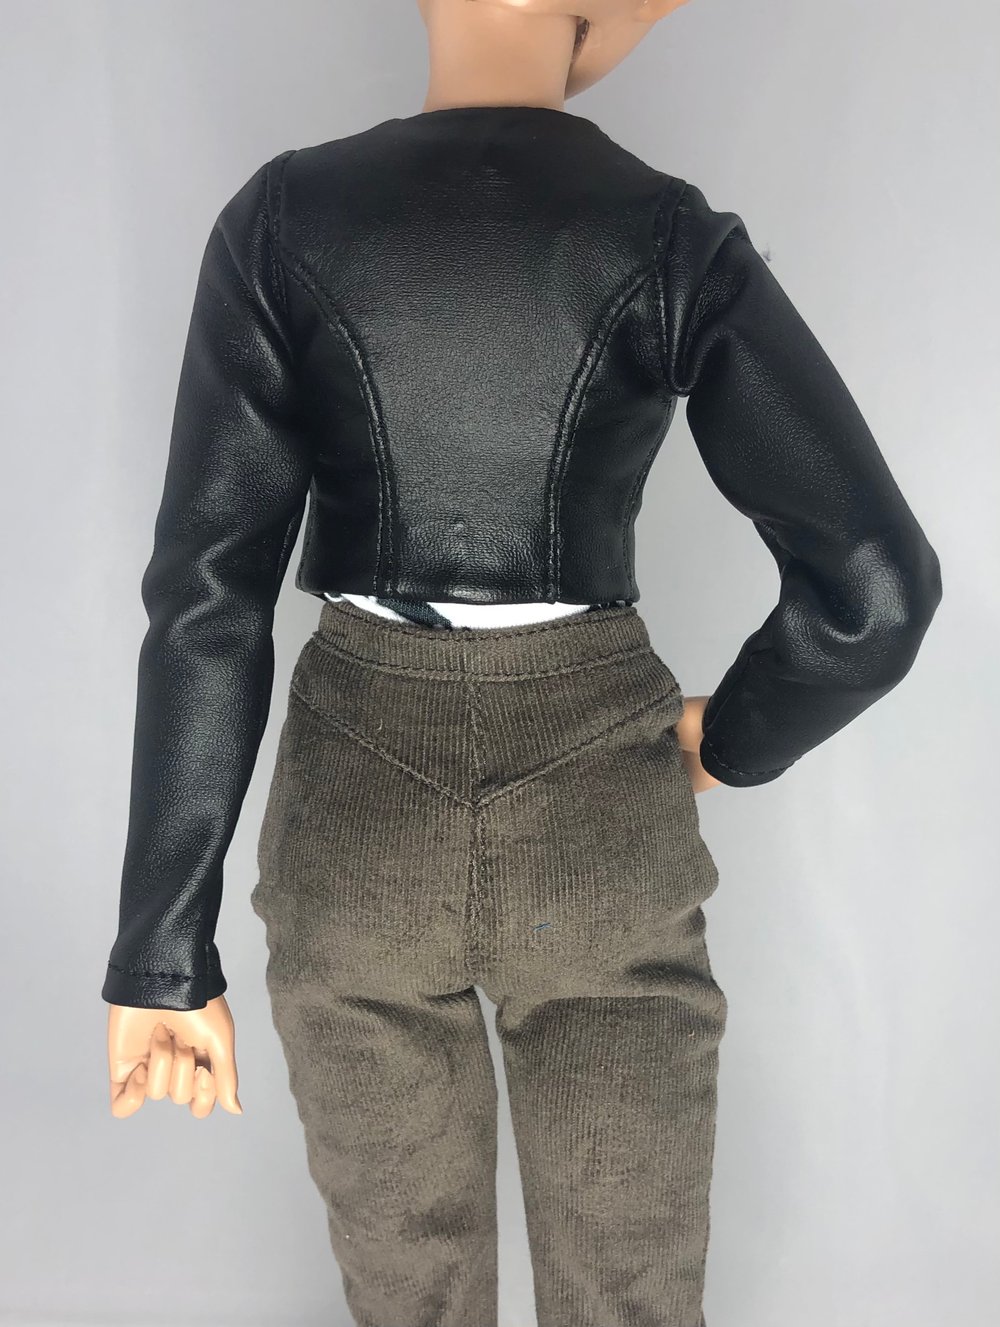 Black Fur Biker Jacket: Minifee